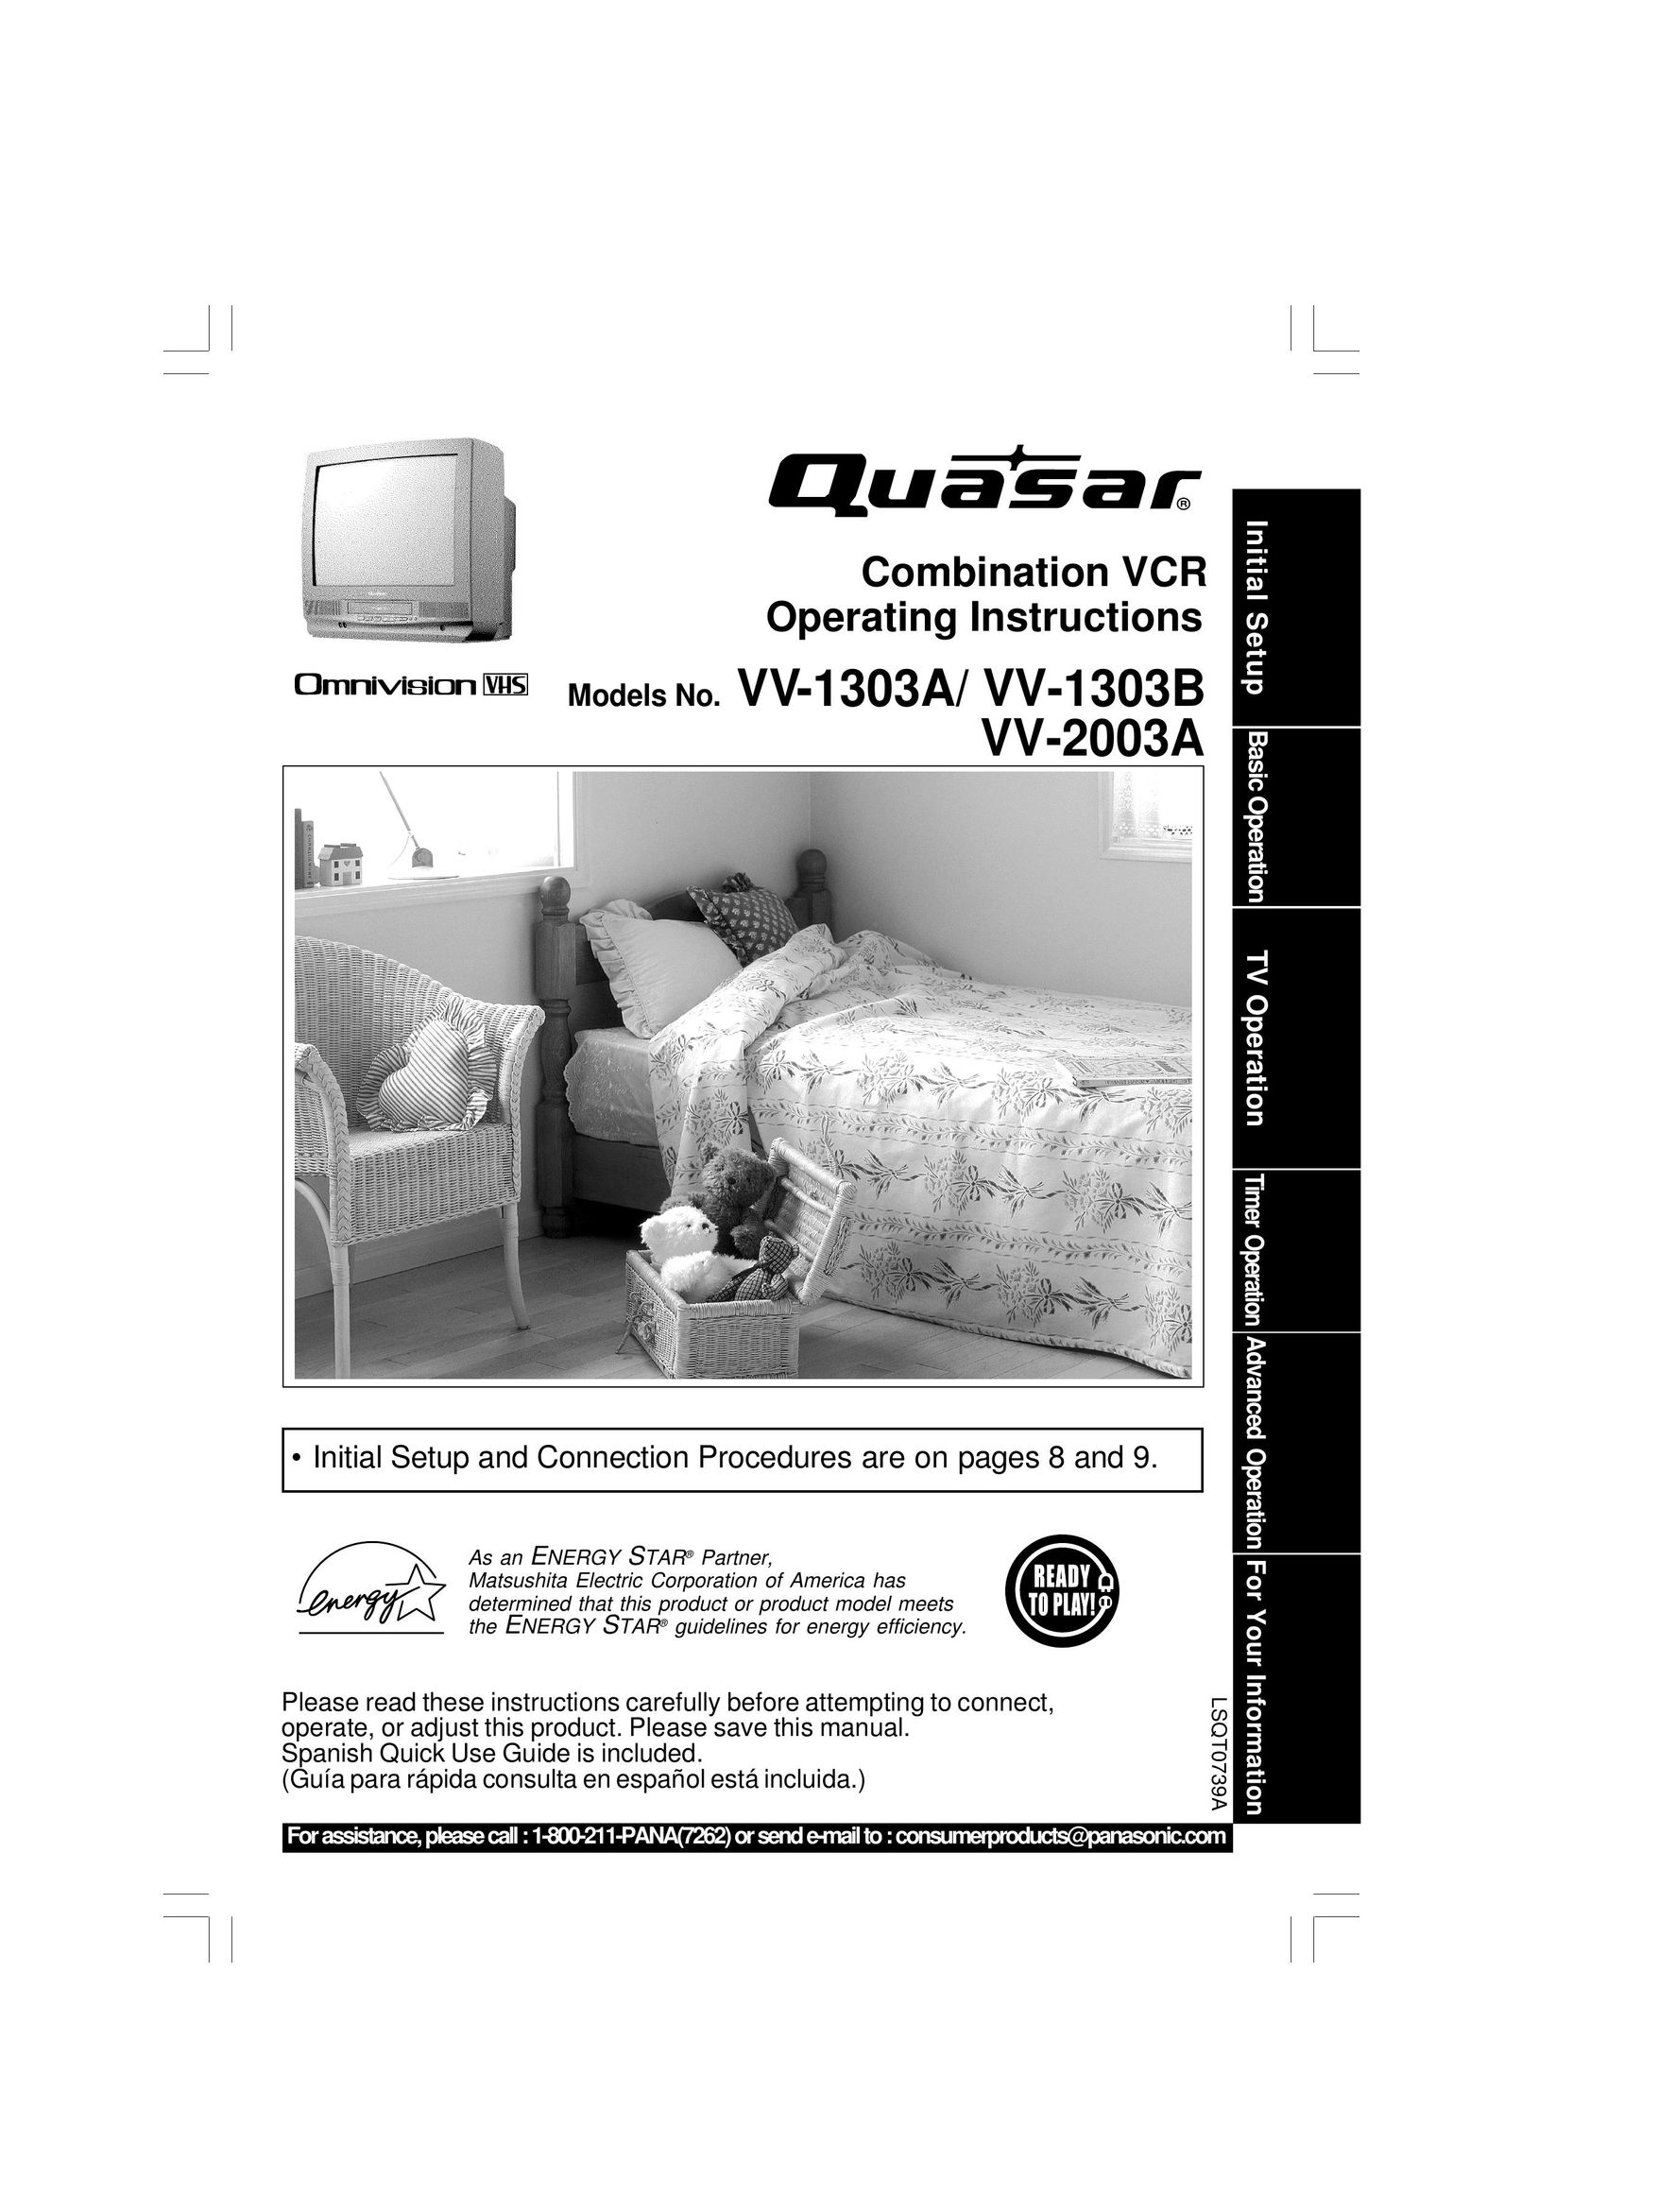 Quasar V V-1303B TV VCR Combo User Manual